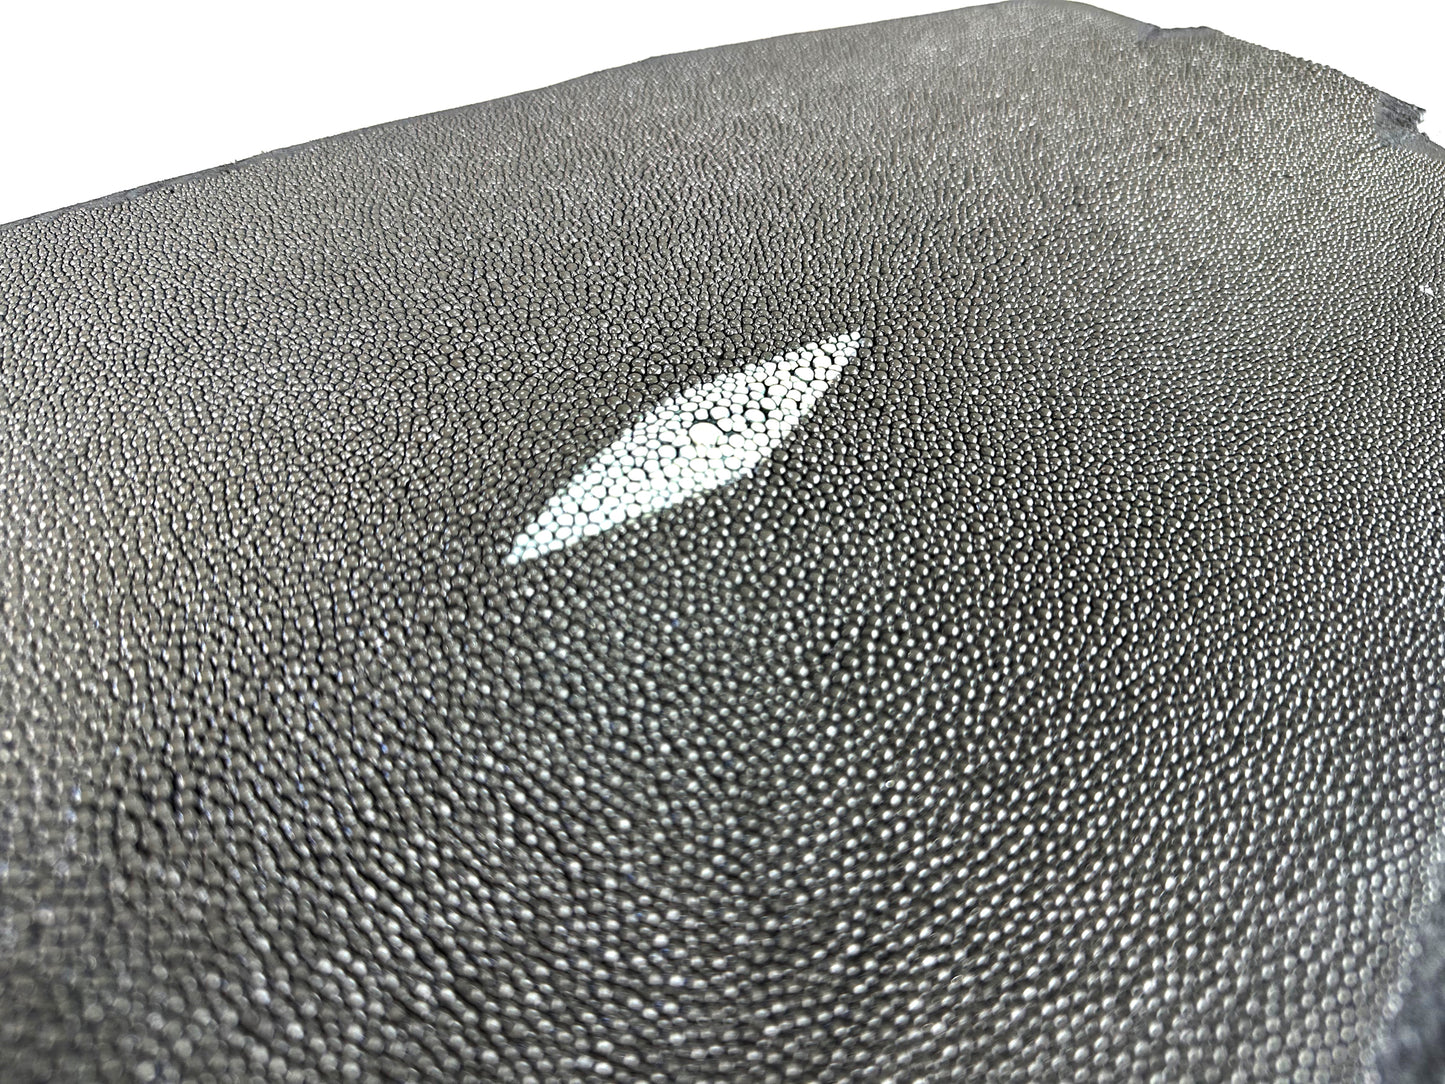 Stingray leather 9inch #7 Gray